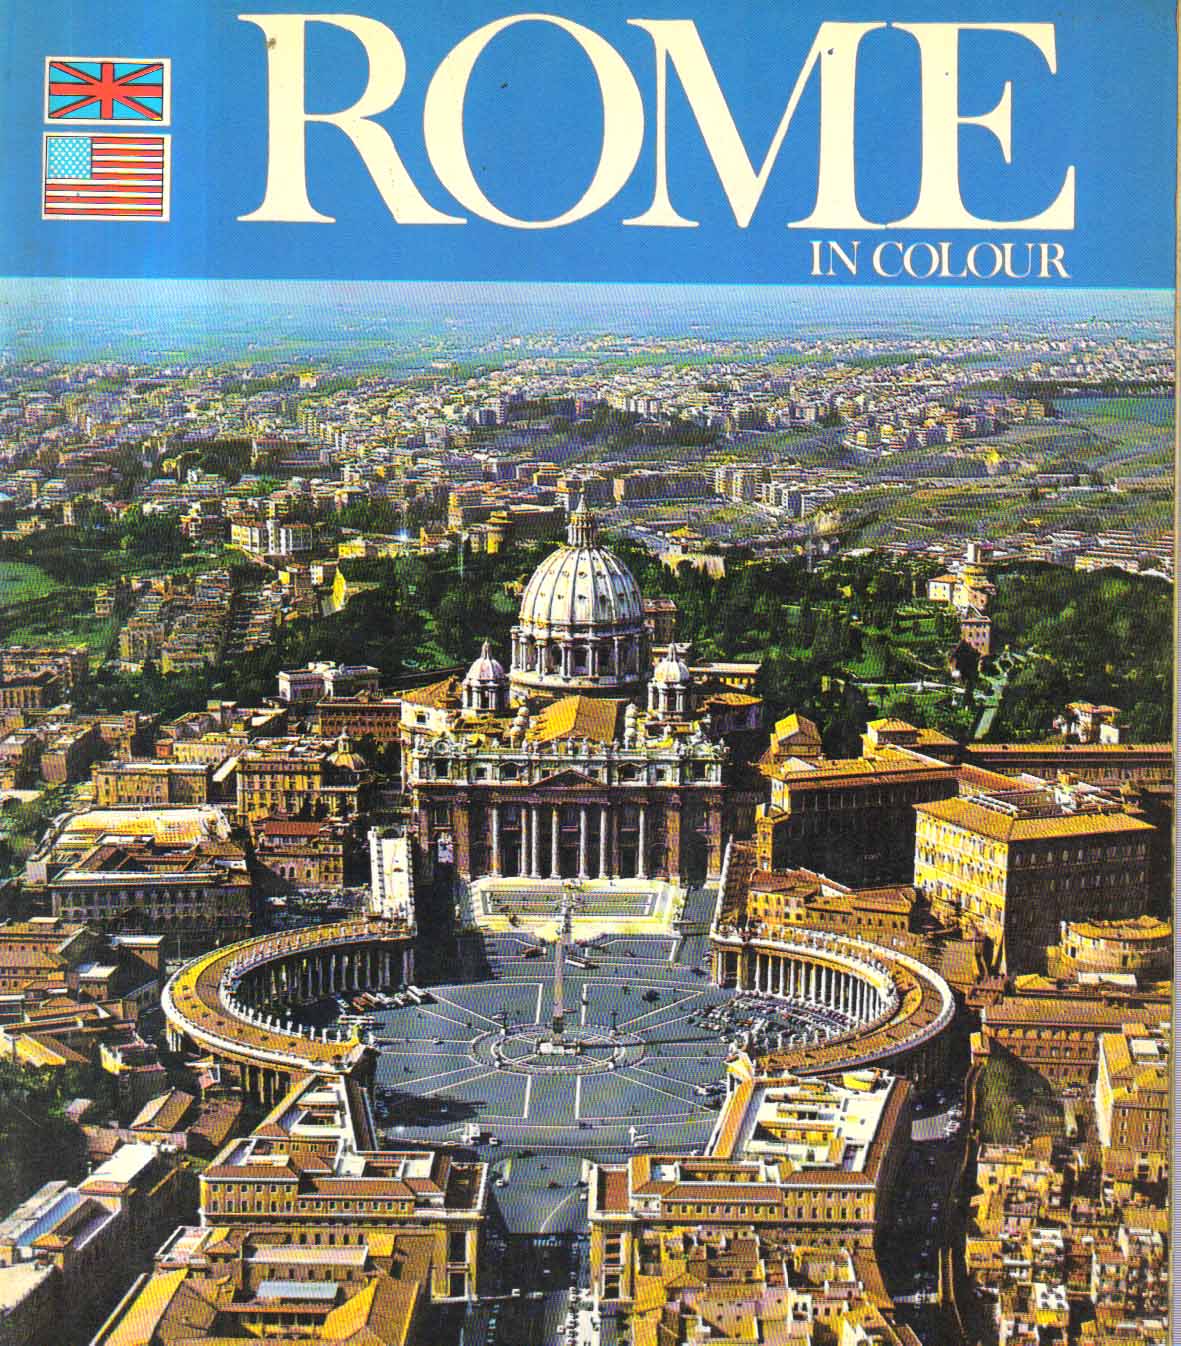 Rome in Colour album and Guide.